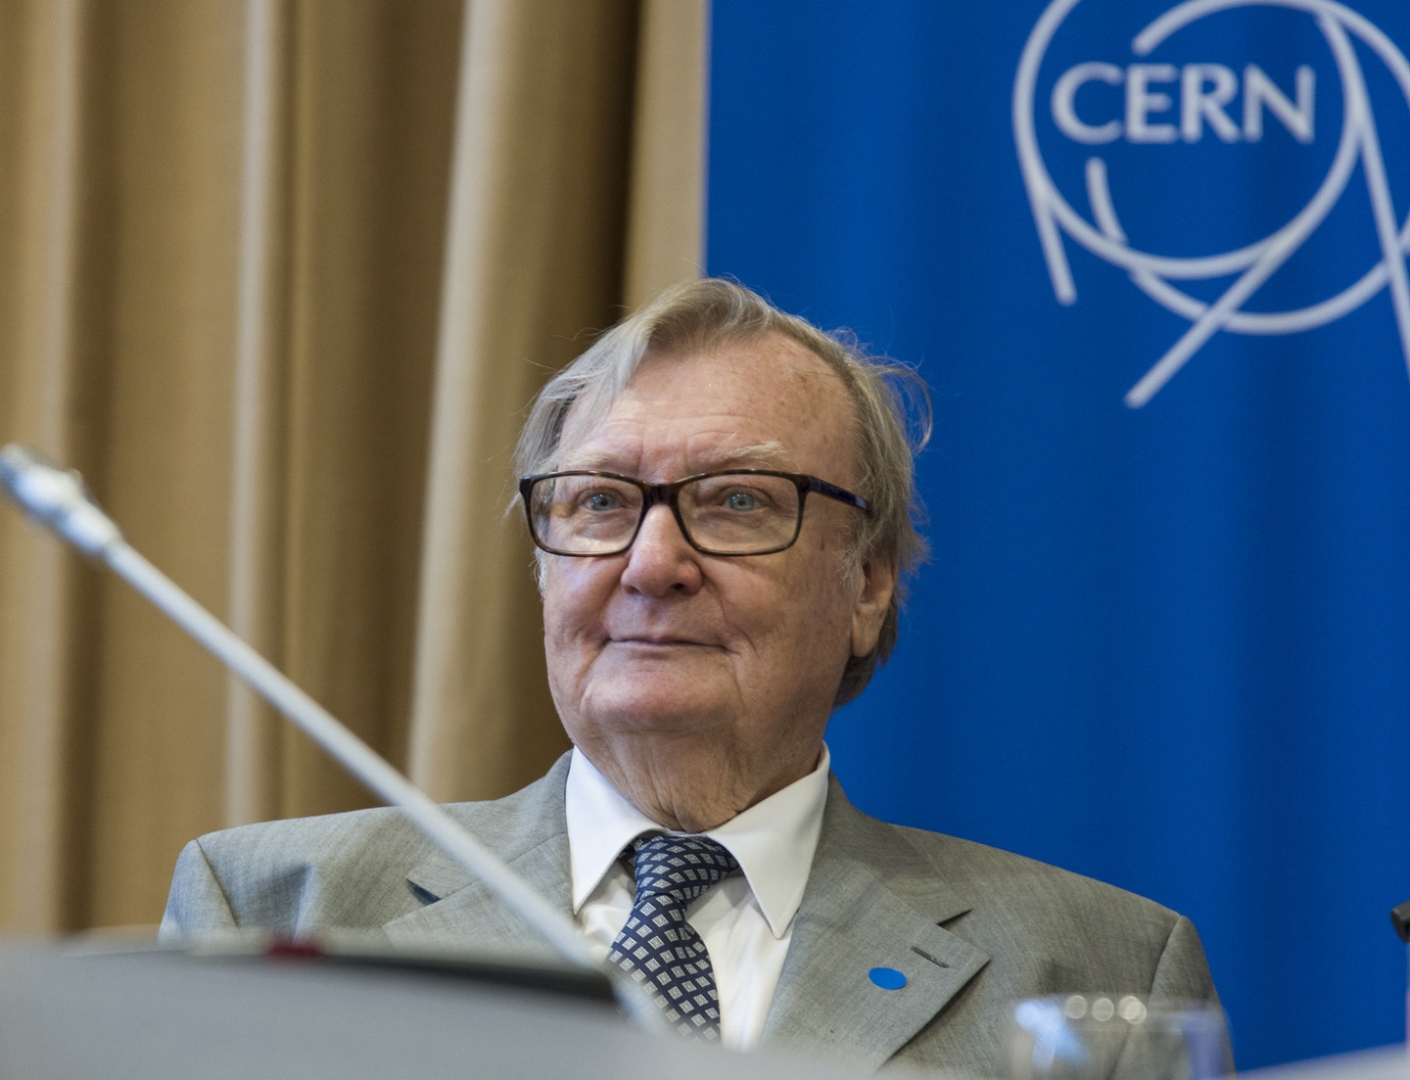 Carlo Rubbia reçoit un prestigieux prix scientifique